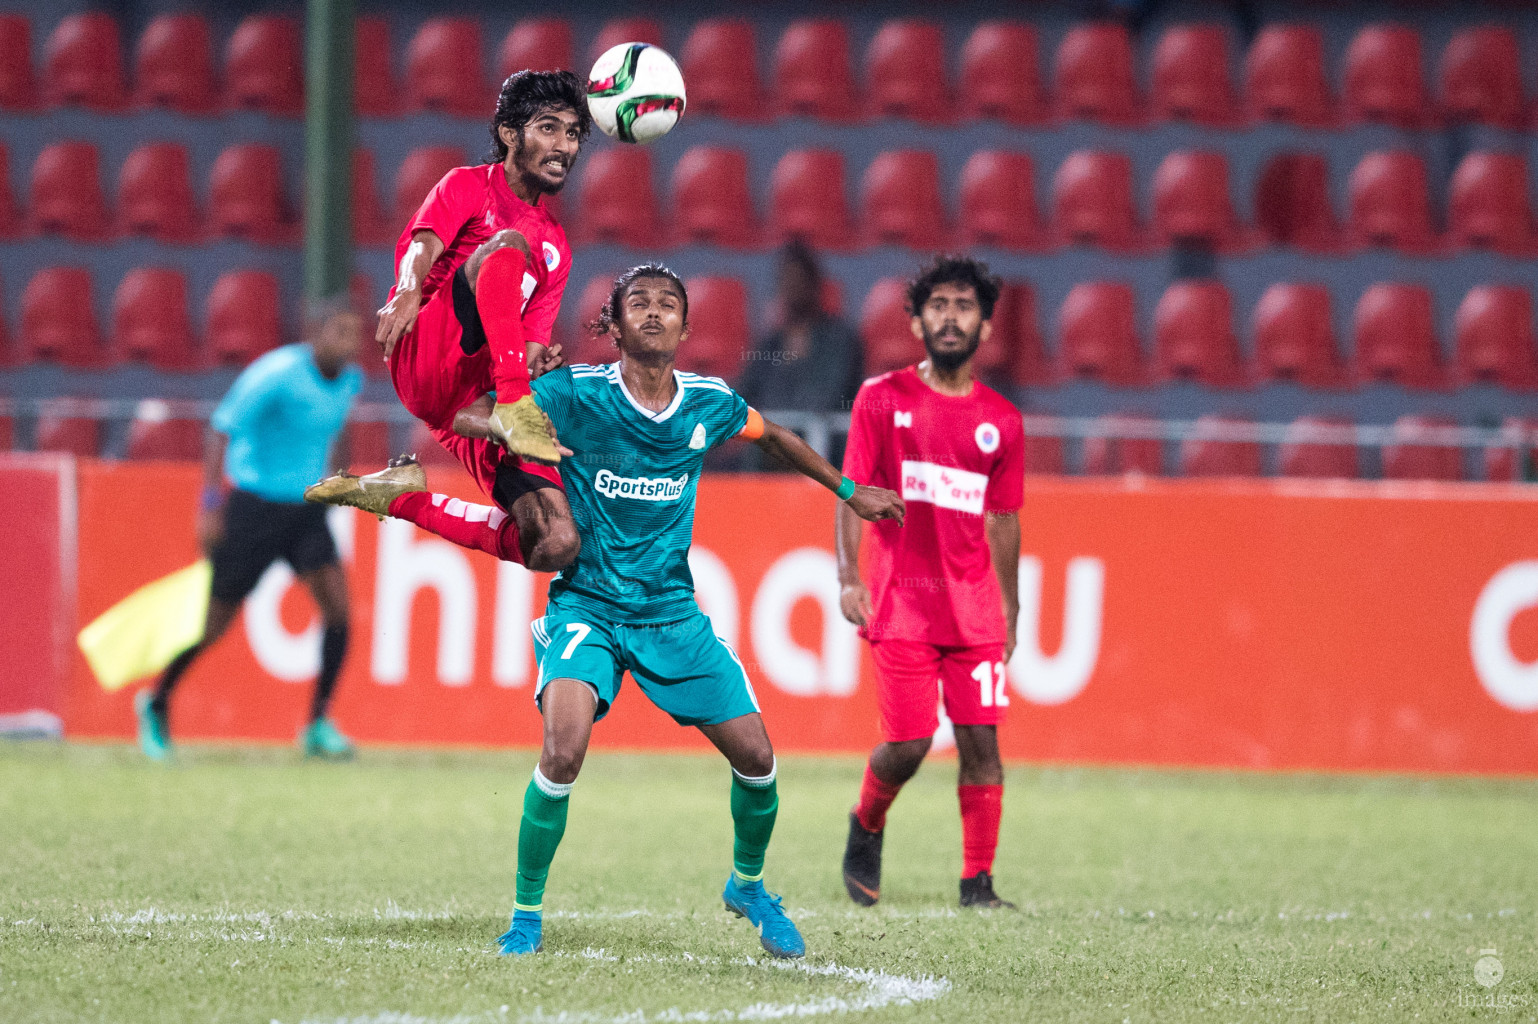 FAM Youth Championship 2019 - Club Green Streets vs Eydhafushi in Male, Maldives, Thursday February 7th, 2019. (Images.mv Photo/Suadh Abdul Sattar)